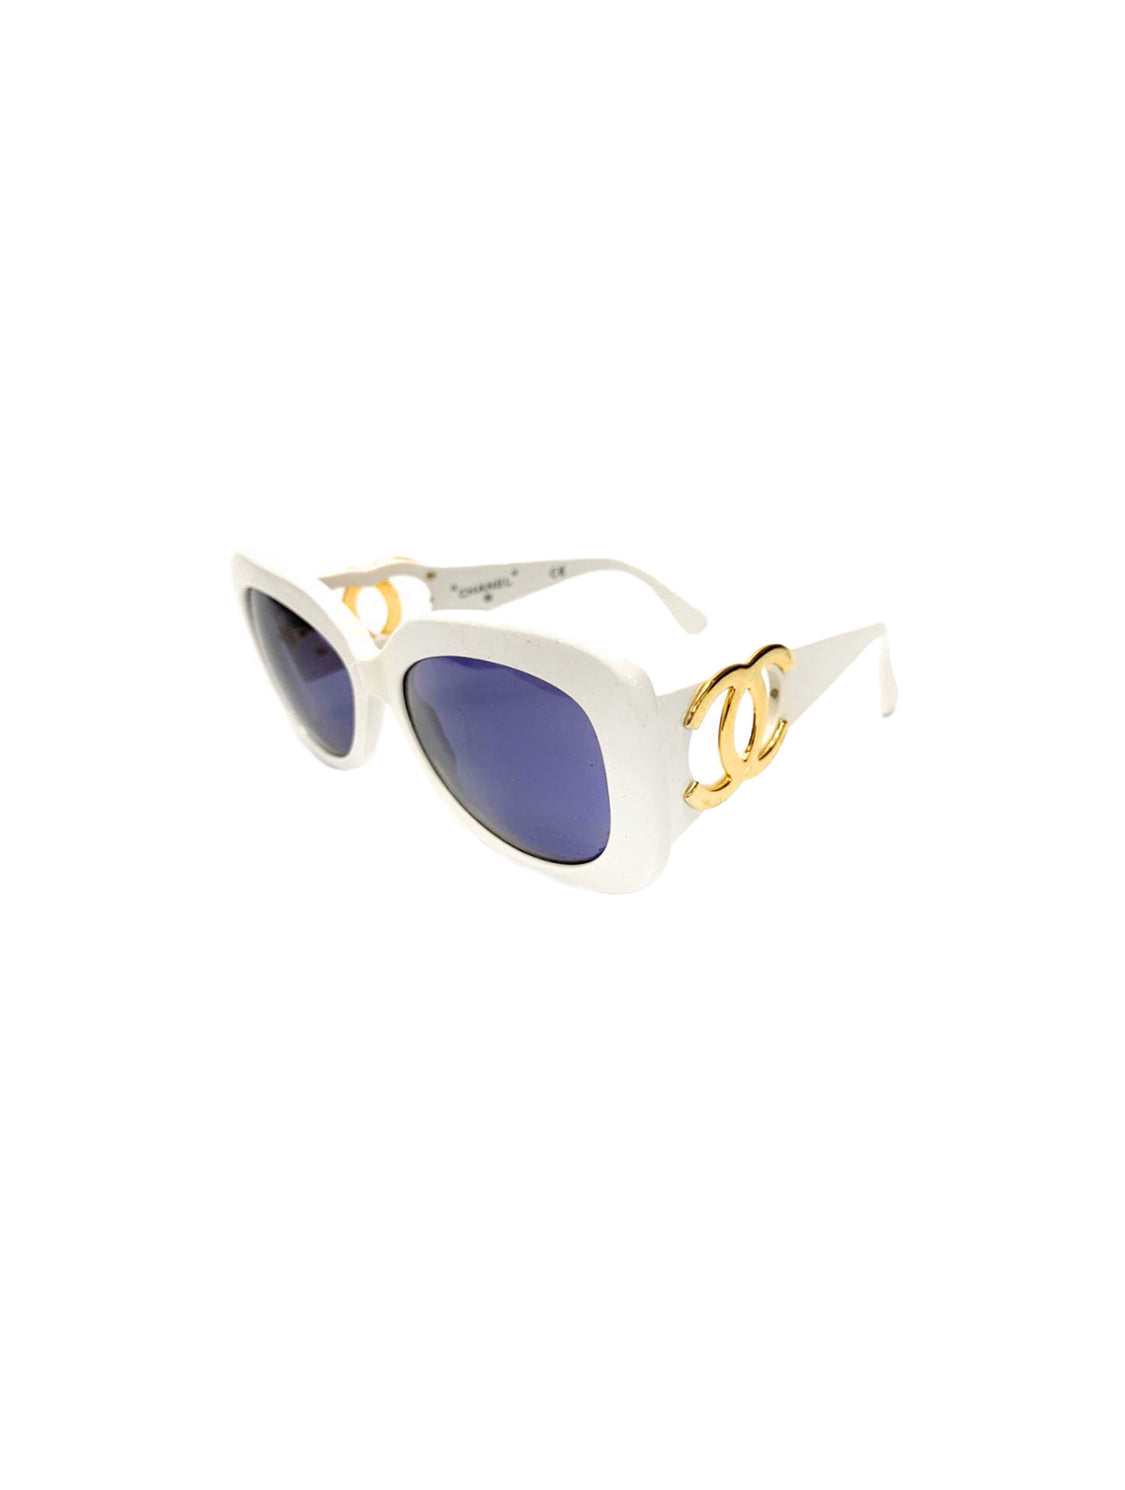 CHANEL White Bow Black Sunglasses  Great Condition  eBay